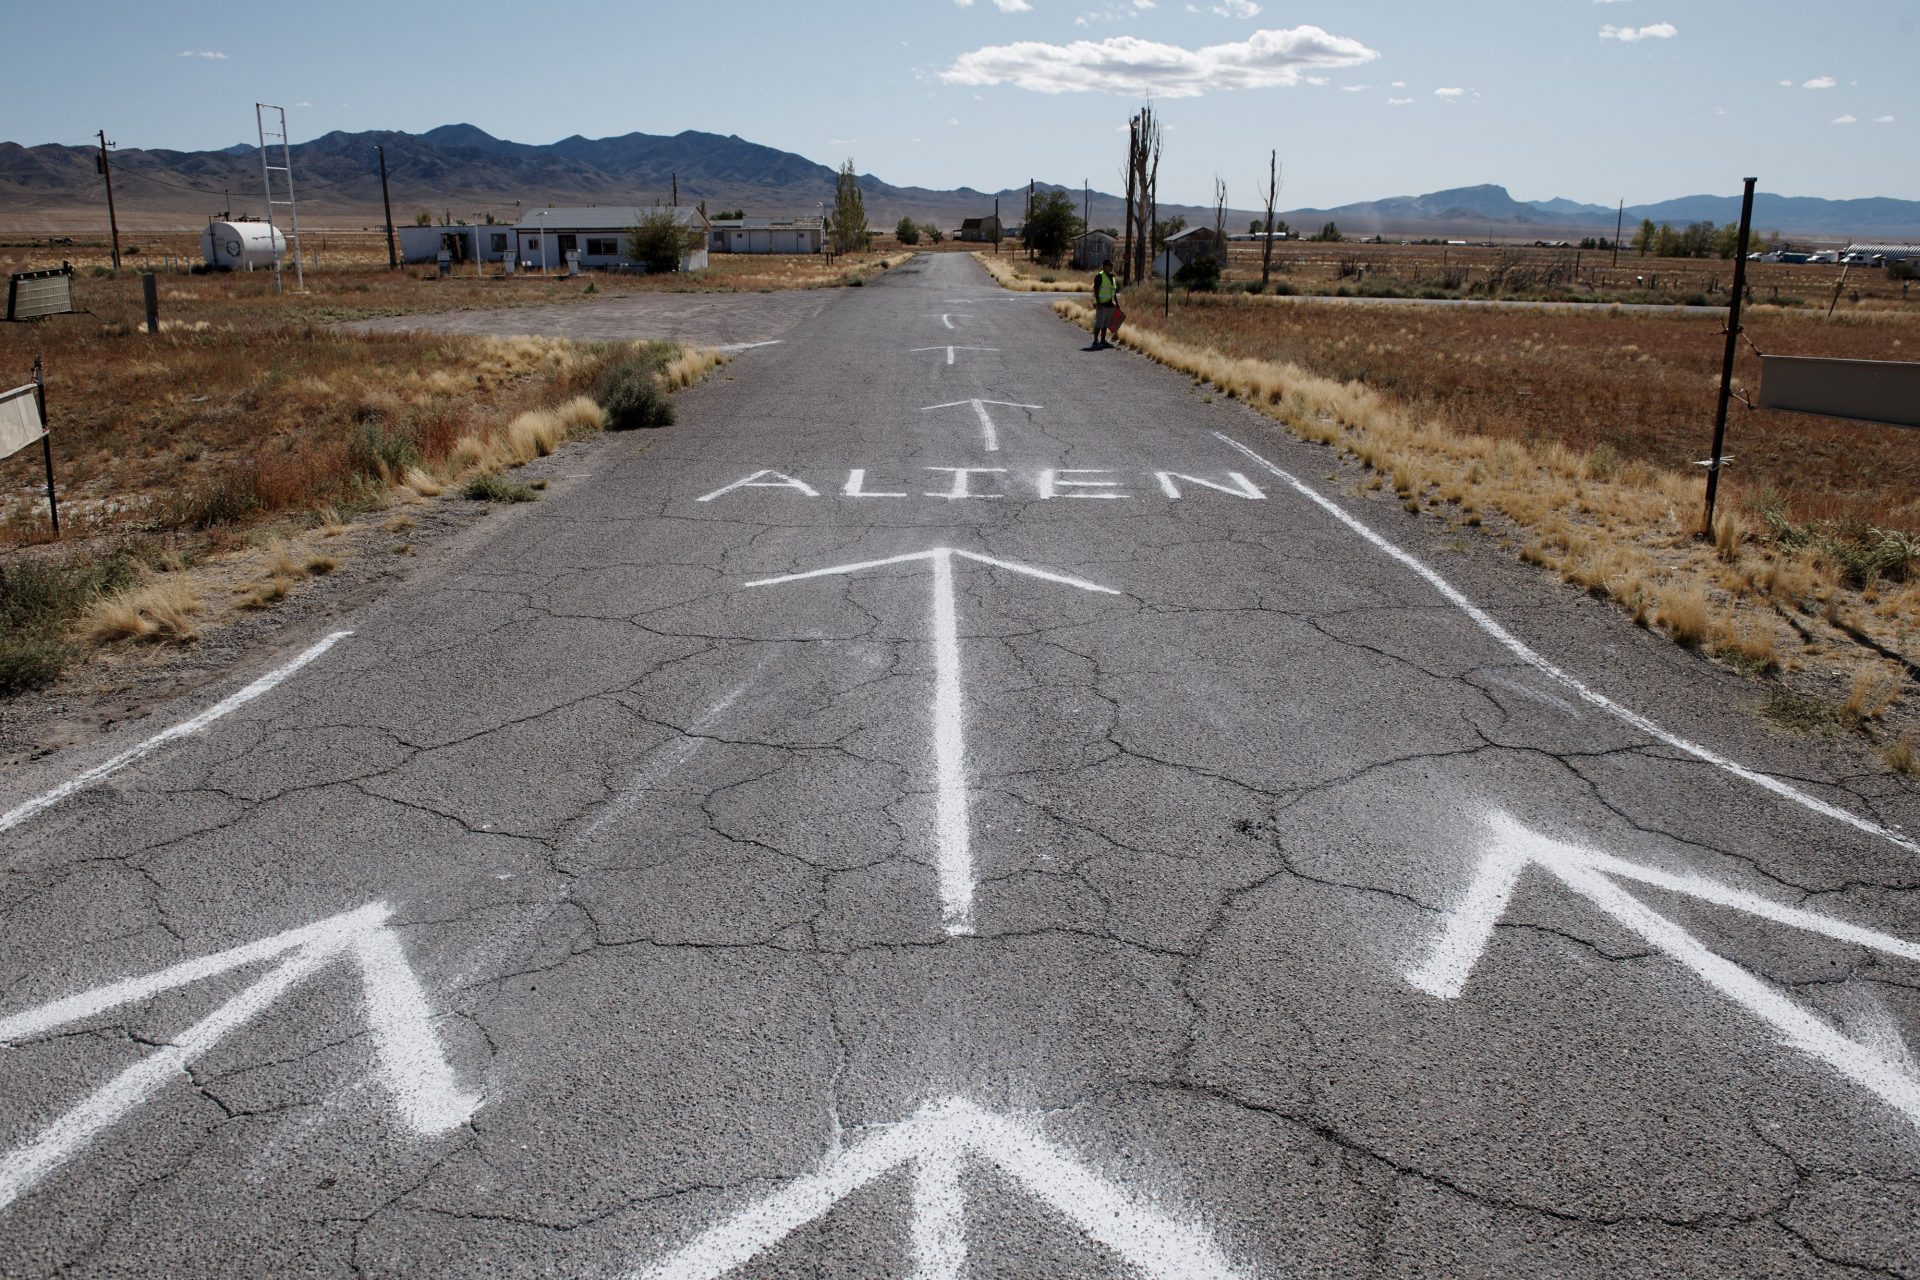 Area 51: Lost Highway